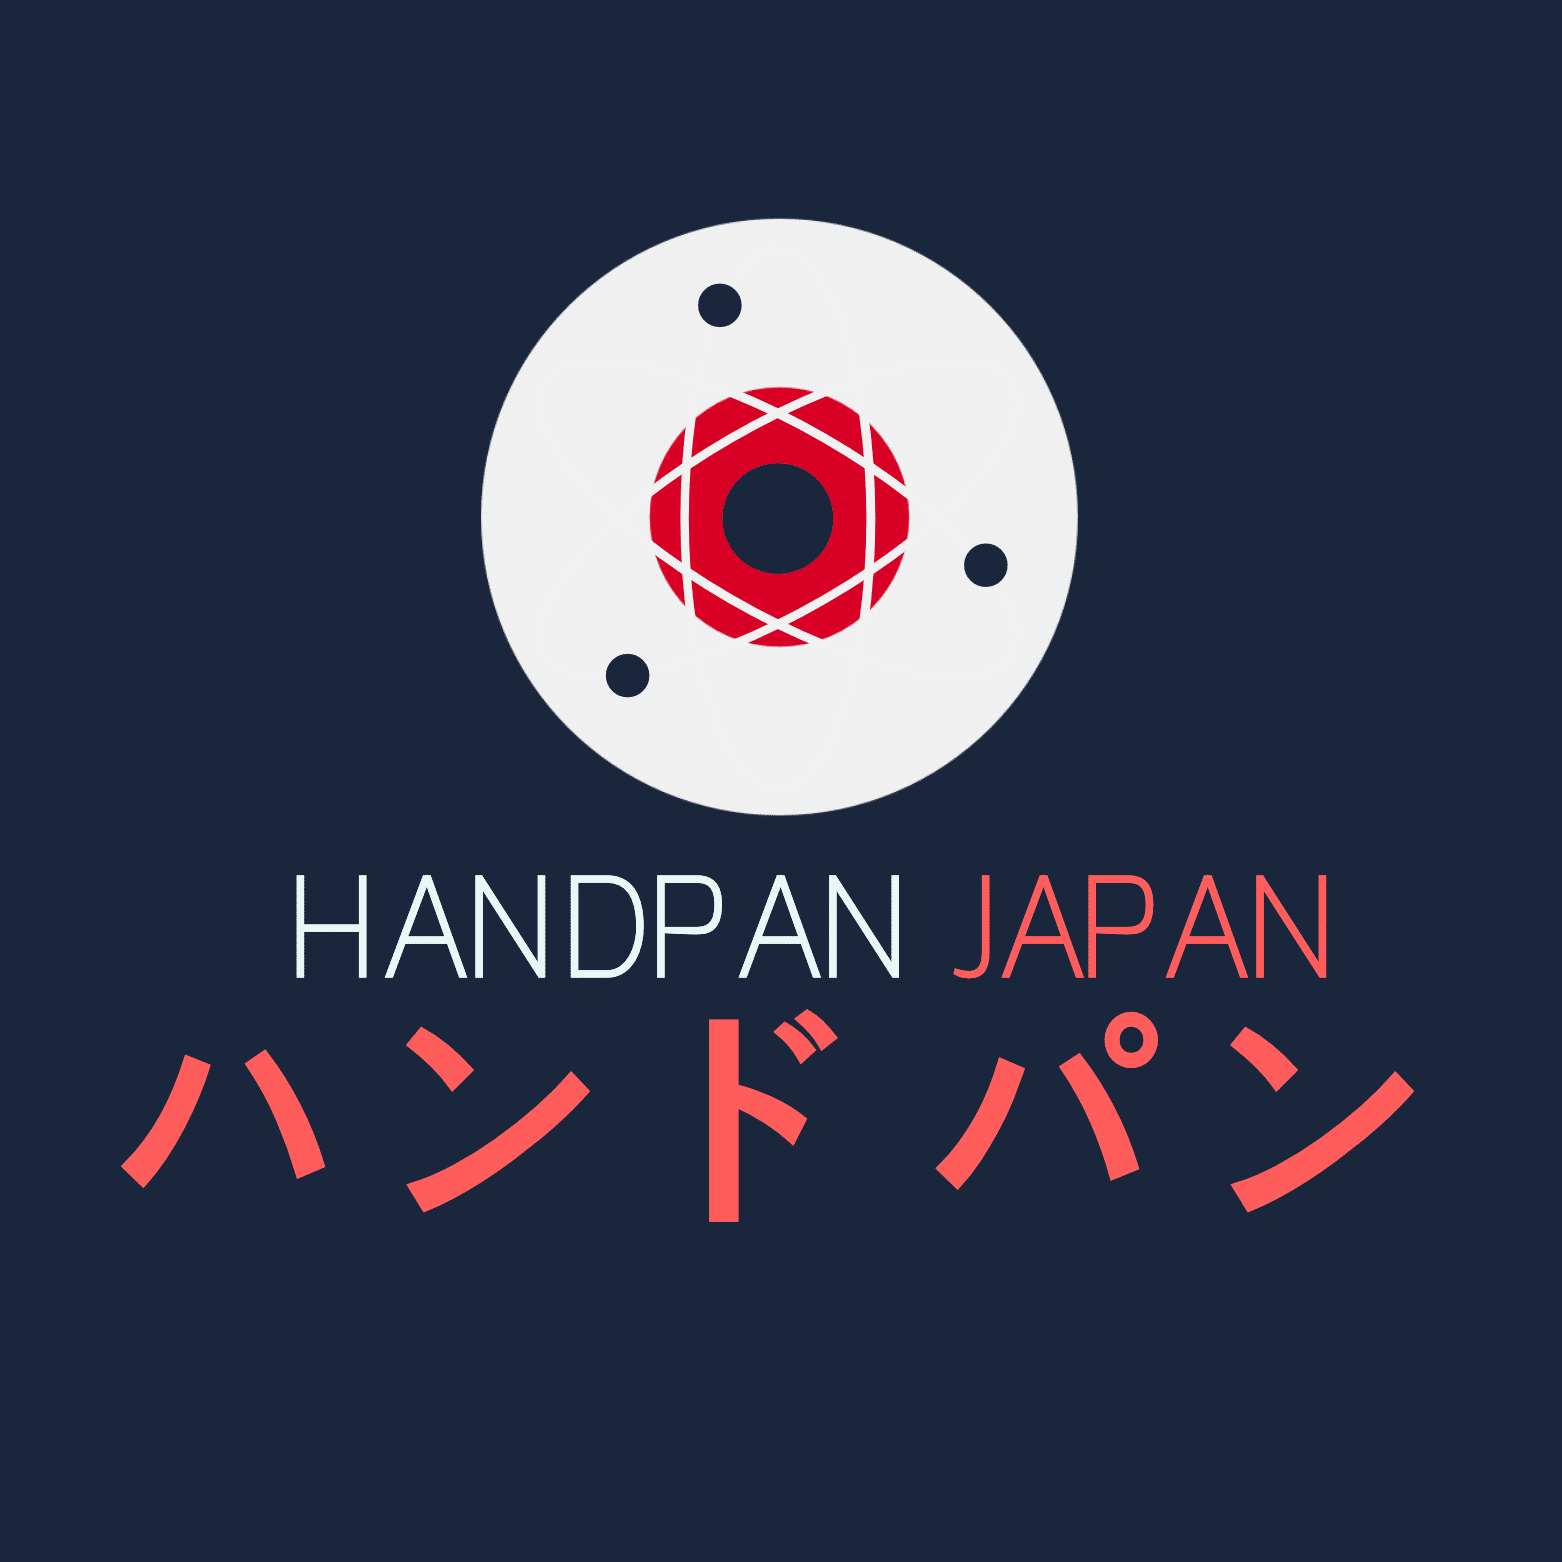 HANDPAN JAPAN「ハンドパン」